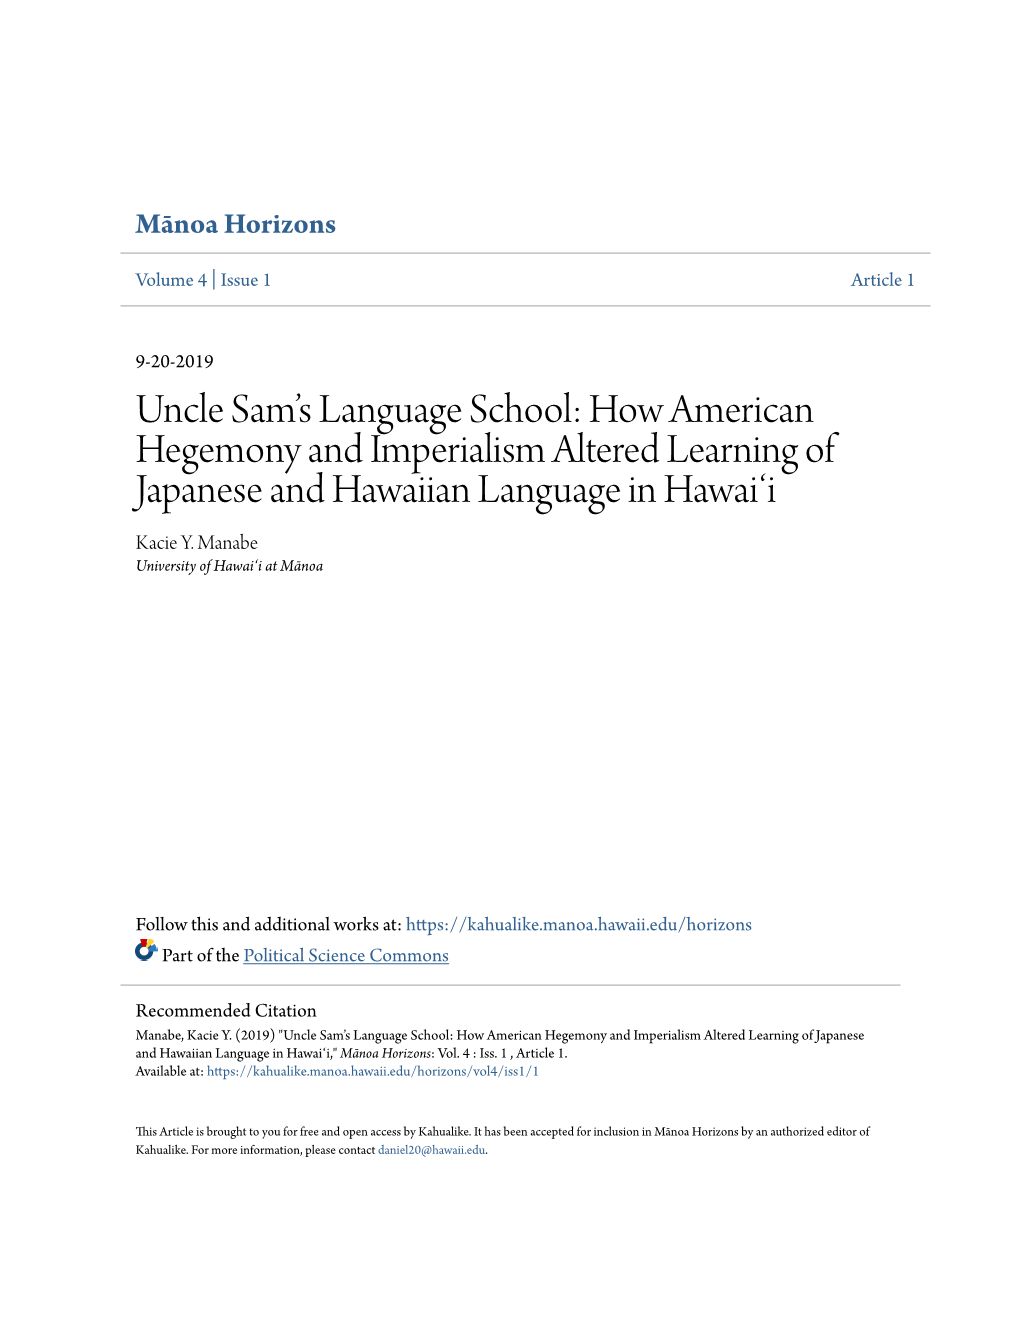 Uncle Sam's Language School: How American Hegemony